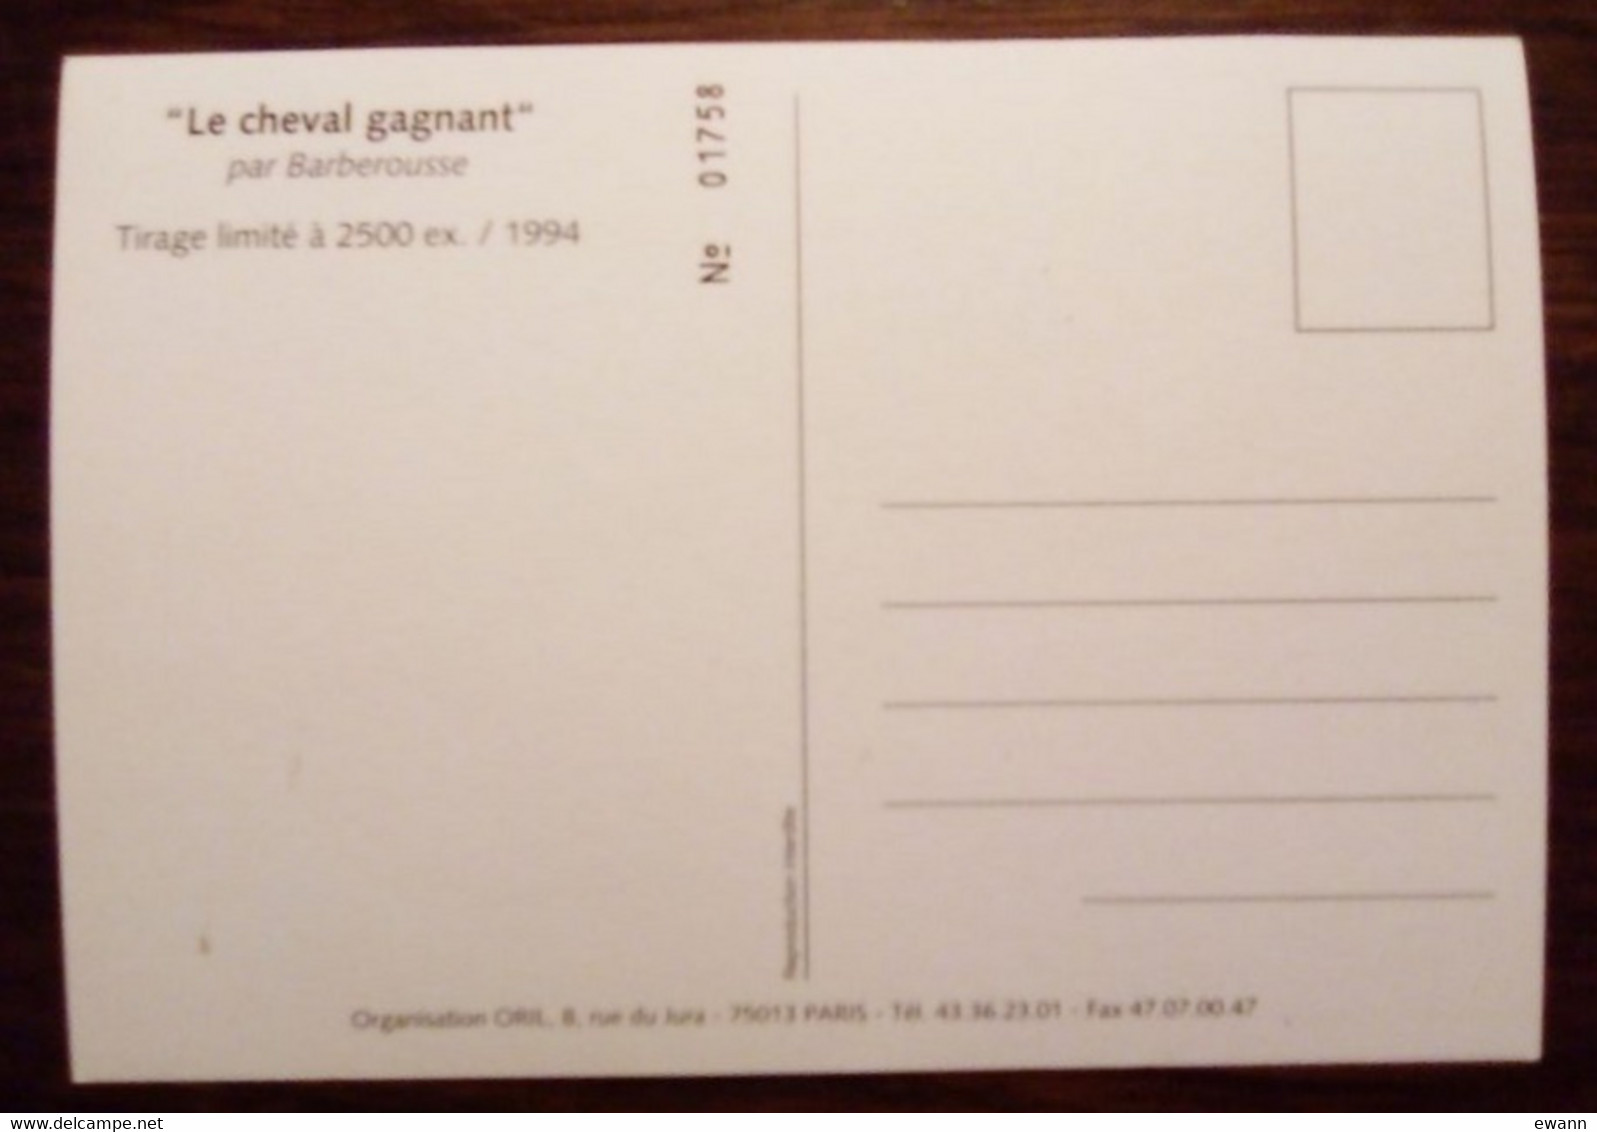 Carte Postale Numérotée - Numicarta Paris-Bercy 1994 - Illustration Barberousse - Bourses & Salons De Collections